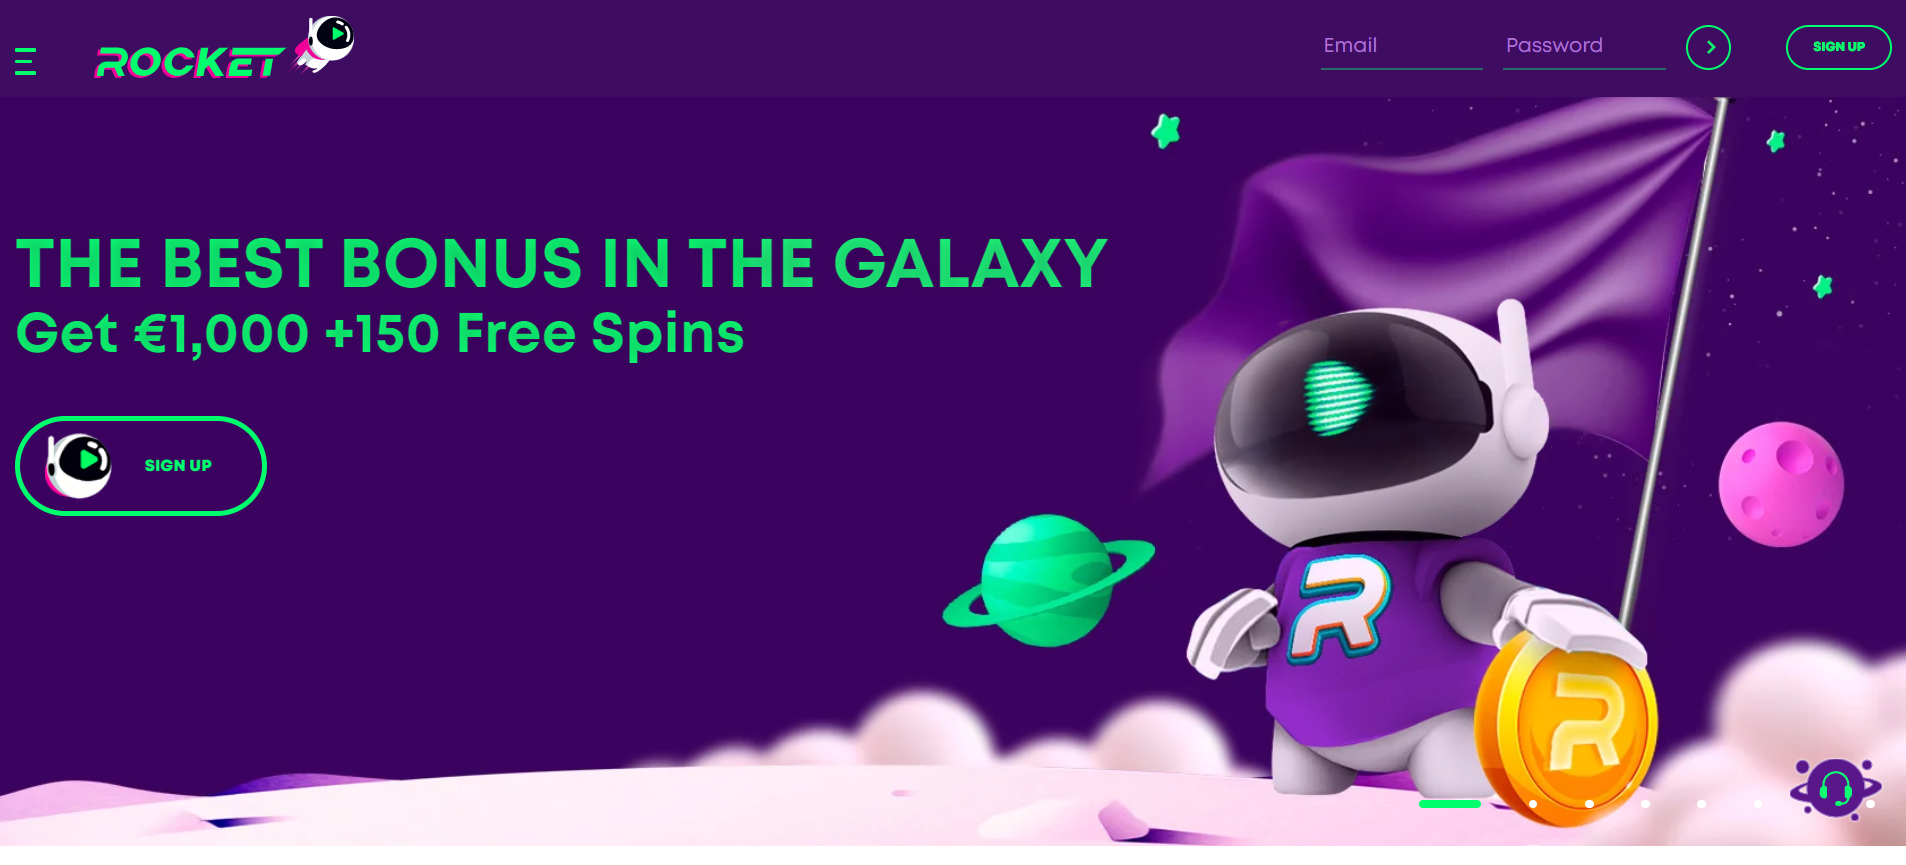 rocket casino online homepage